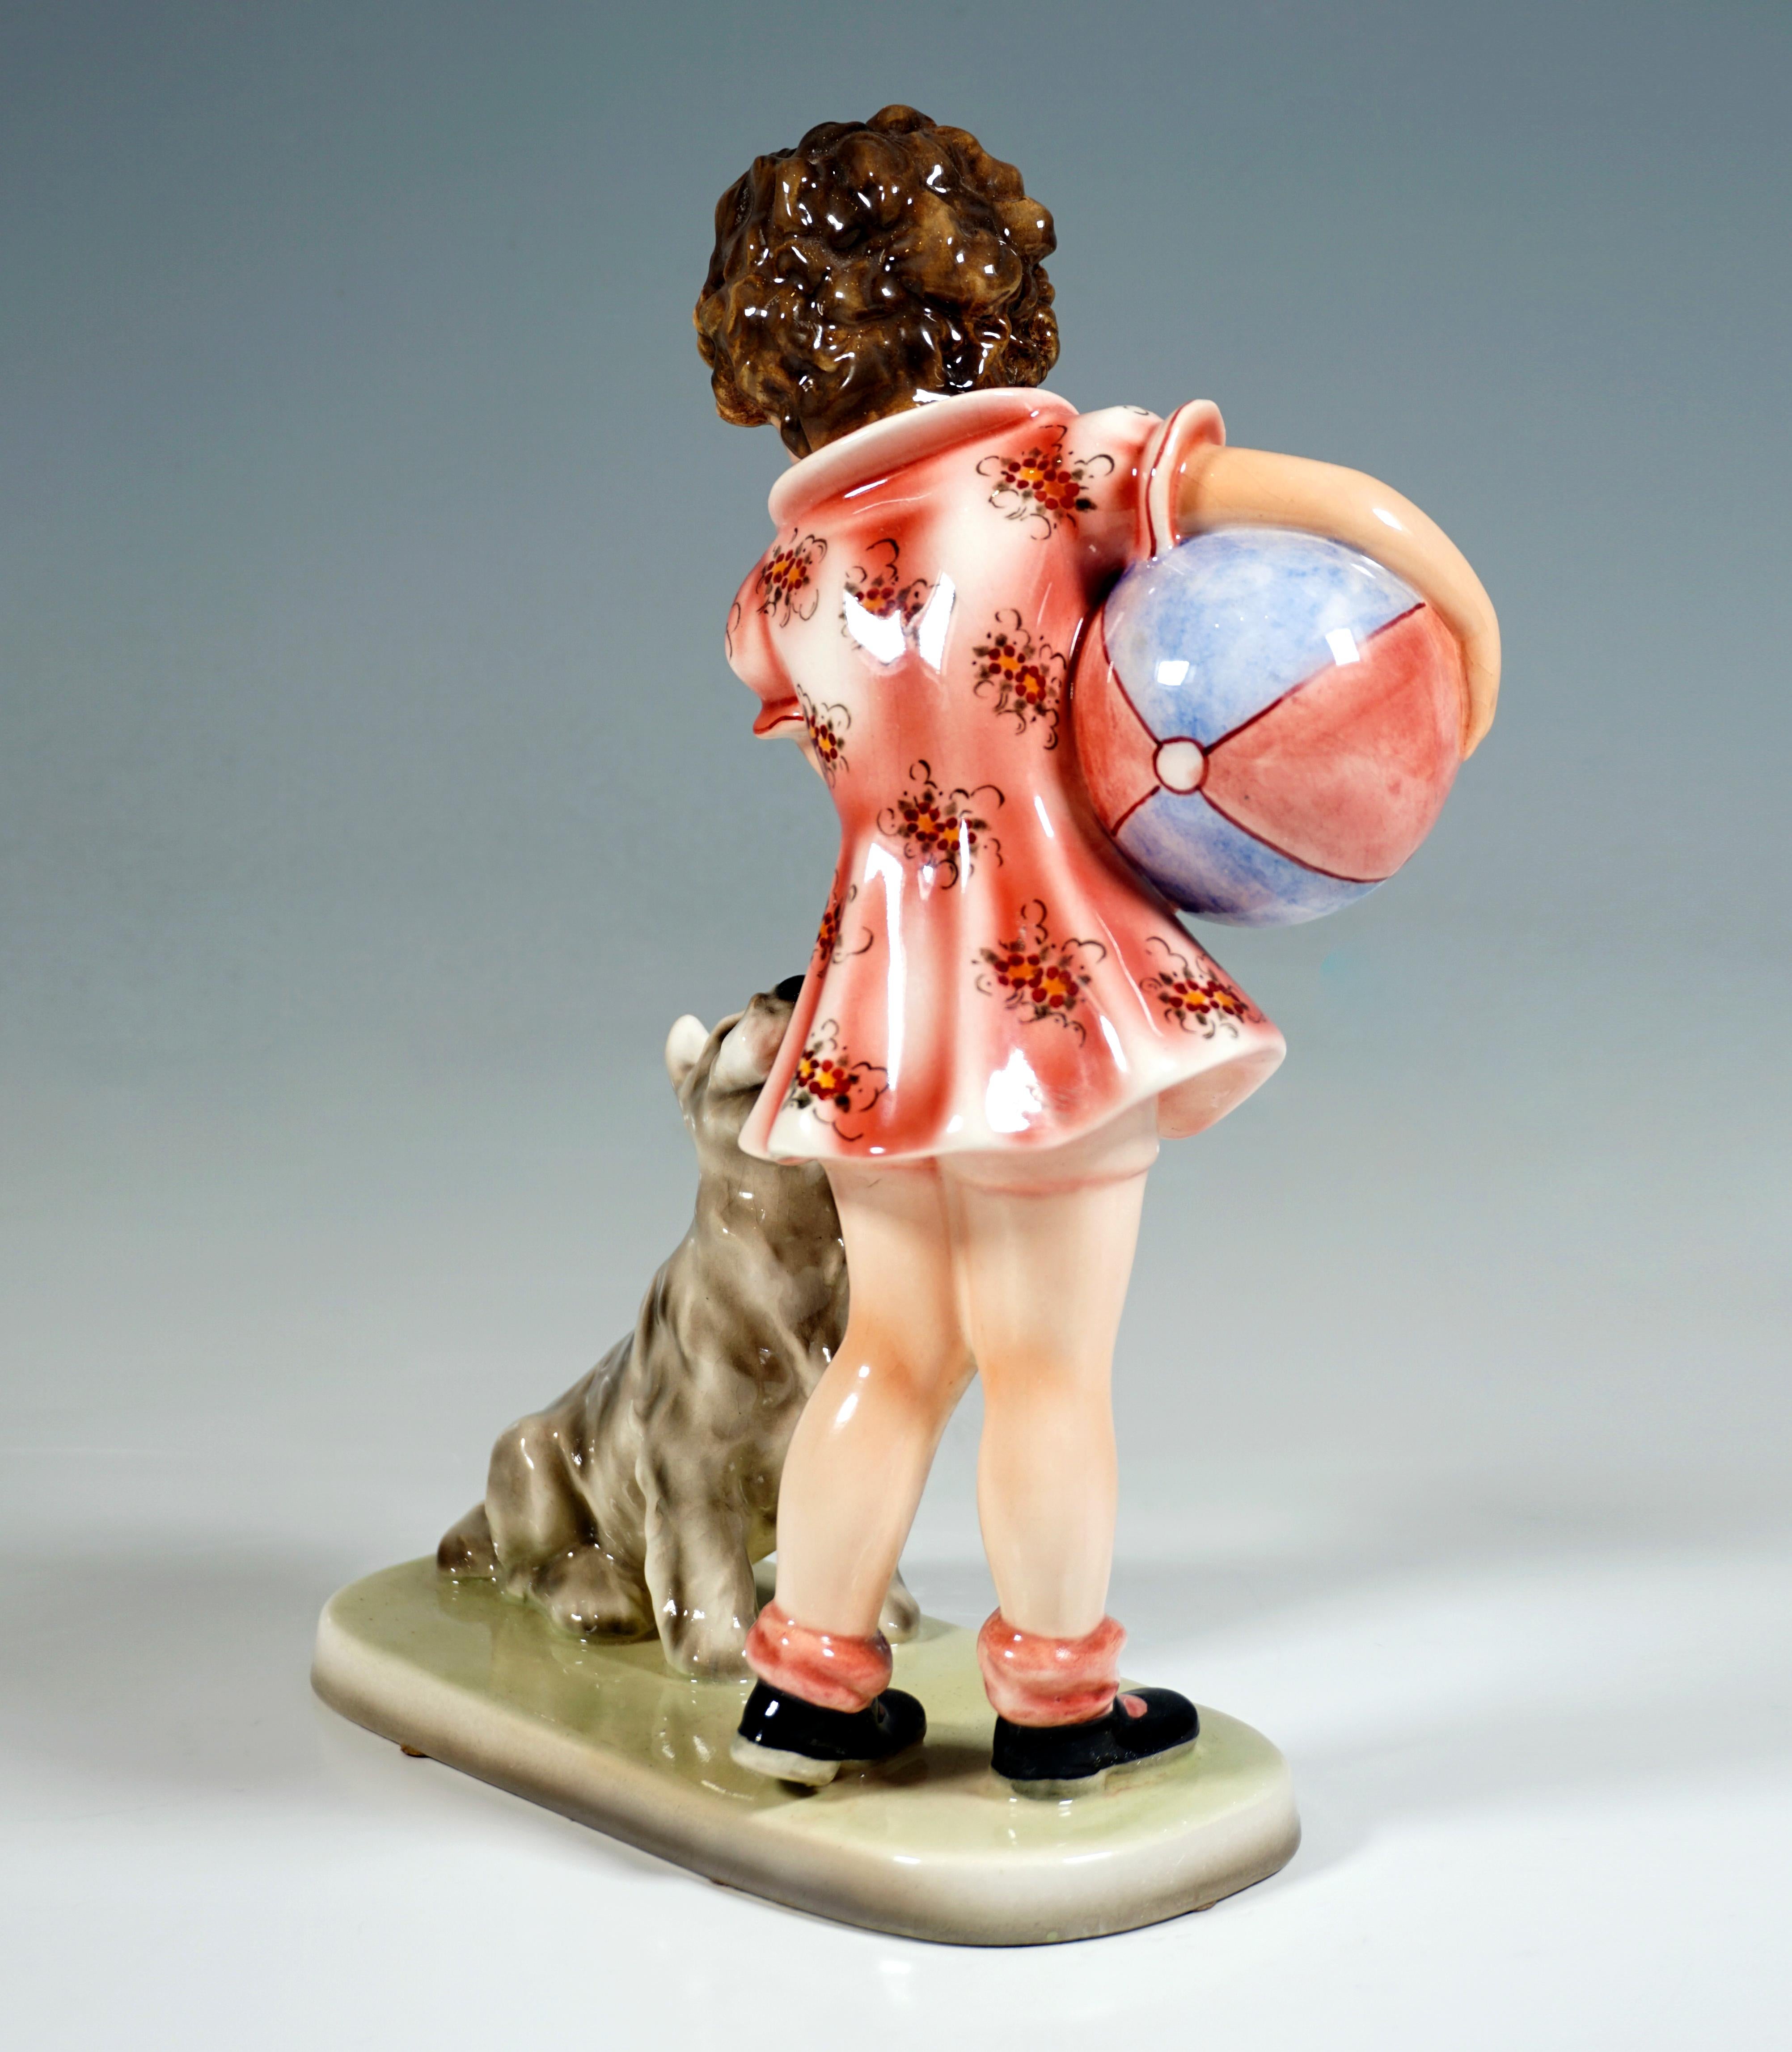 Austrian Goldscheider Figurine, Girl with Ball and Terrier by Germaine Bouret, 1937